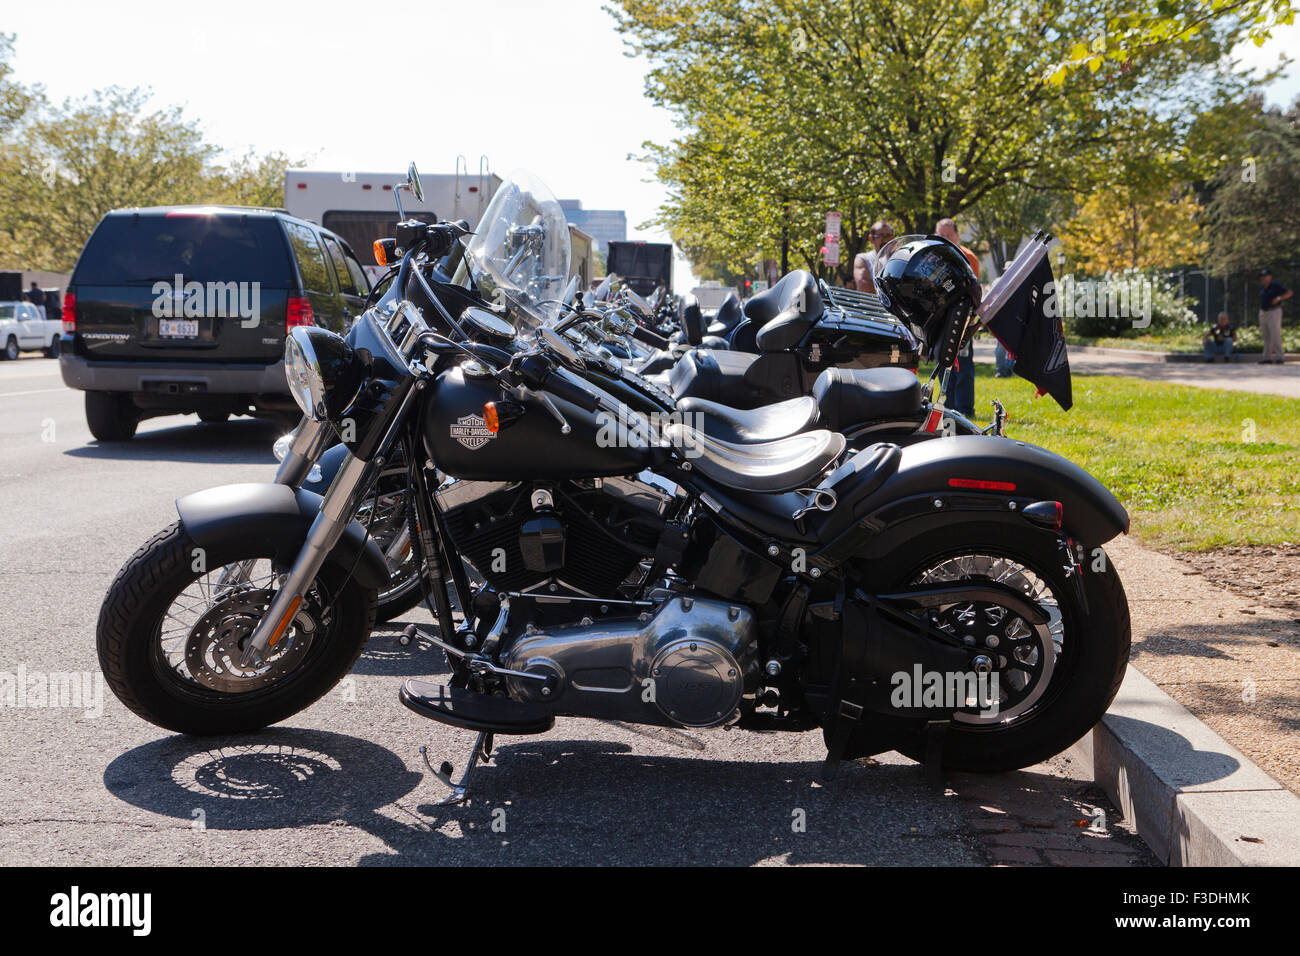 Harley Davidson motorcycles parked - USA Stock Photo